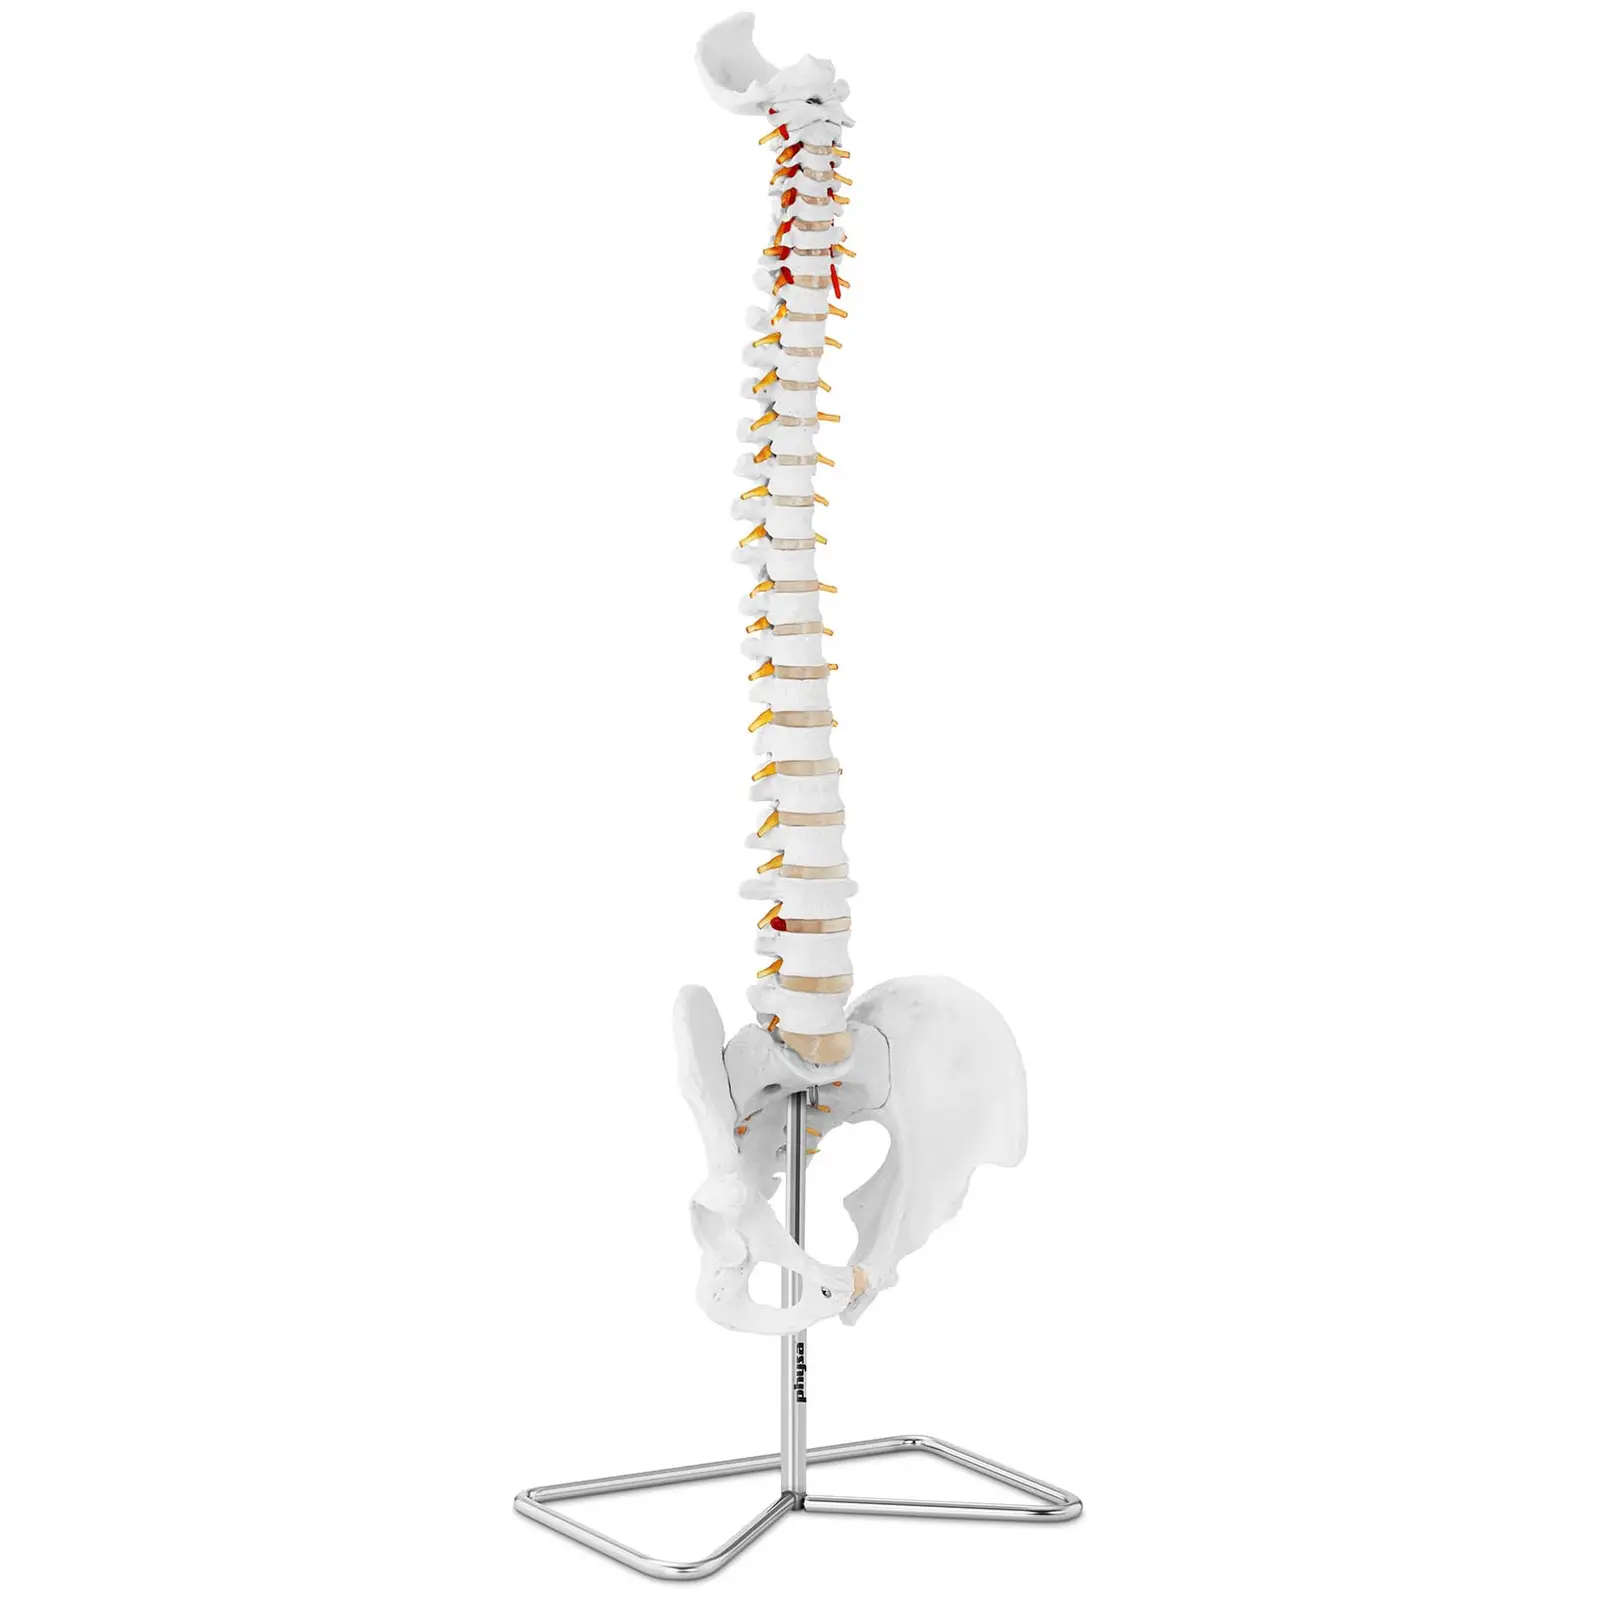 Model Spine with Pelvis - lifesized